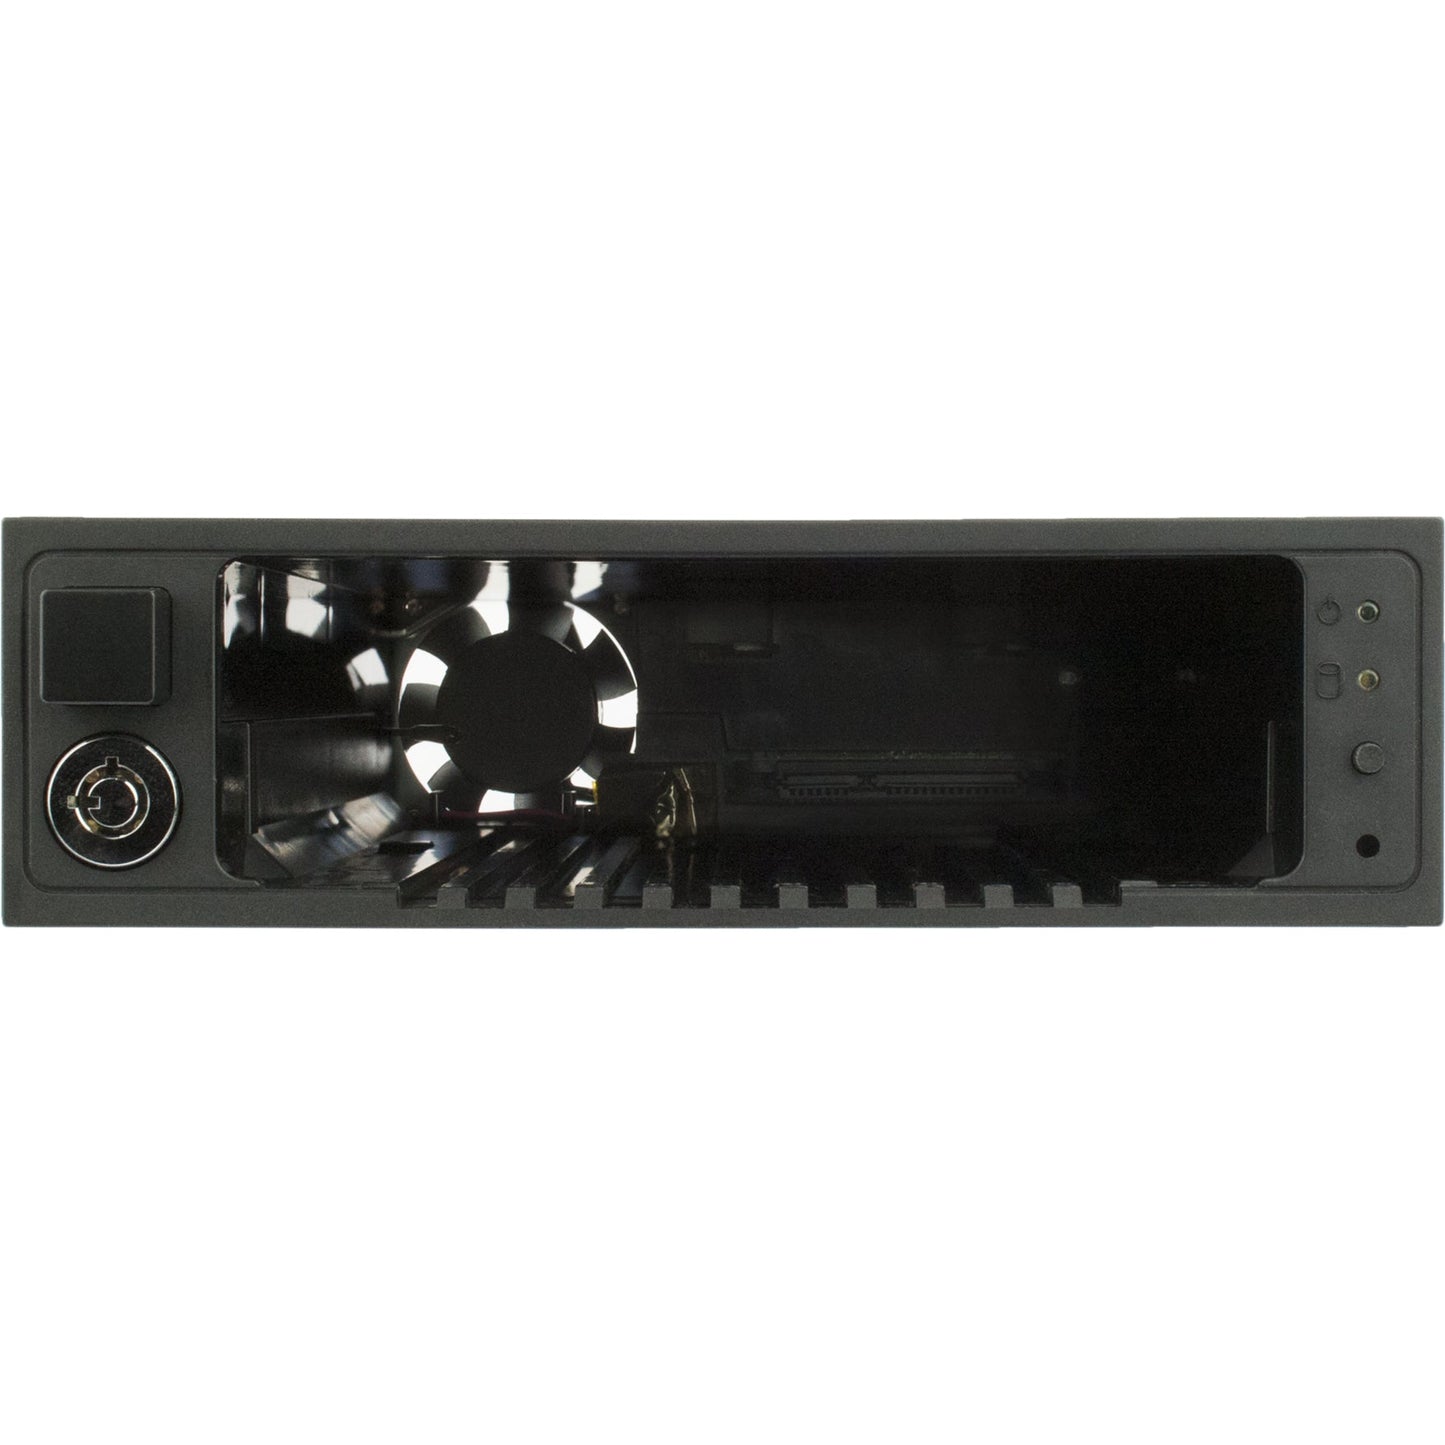 CRU Data Express DX175 Hard Drive Carrier Frame for 5.25" Internal